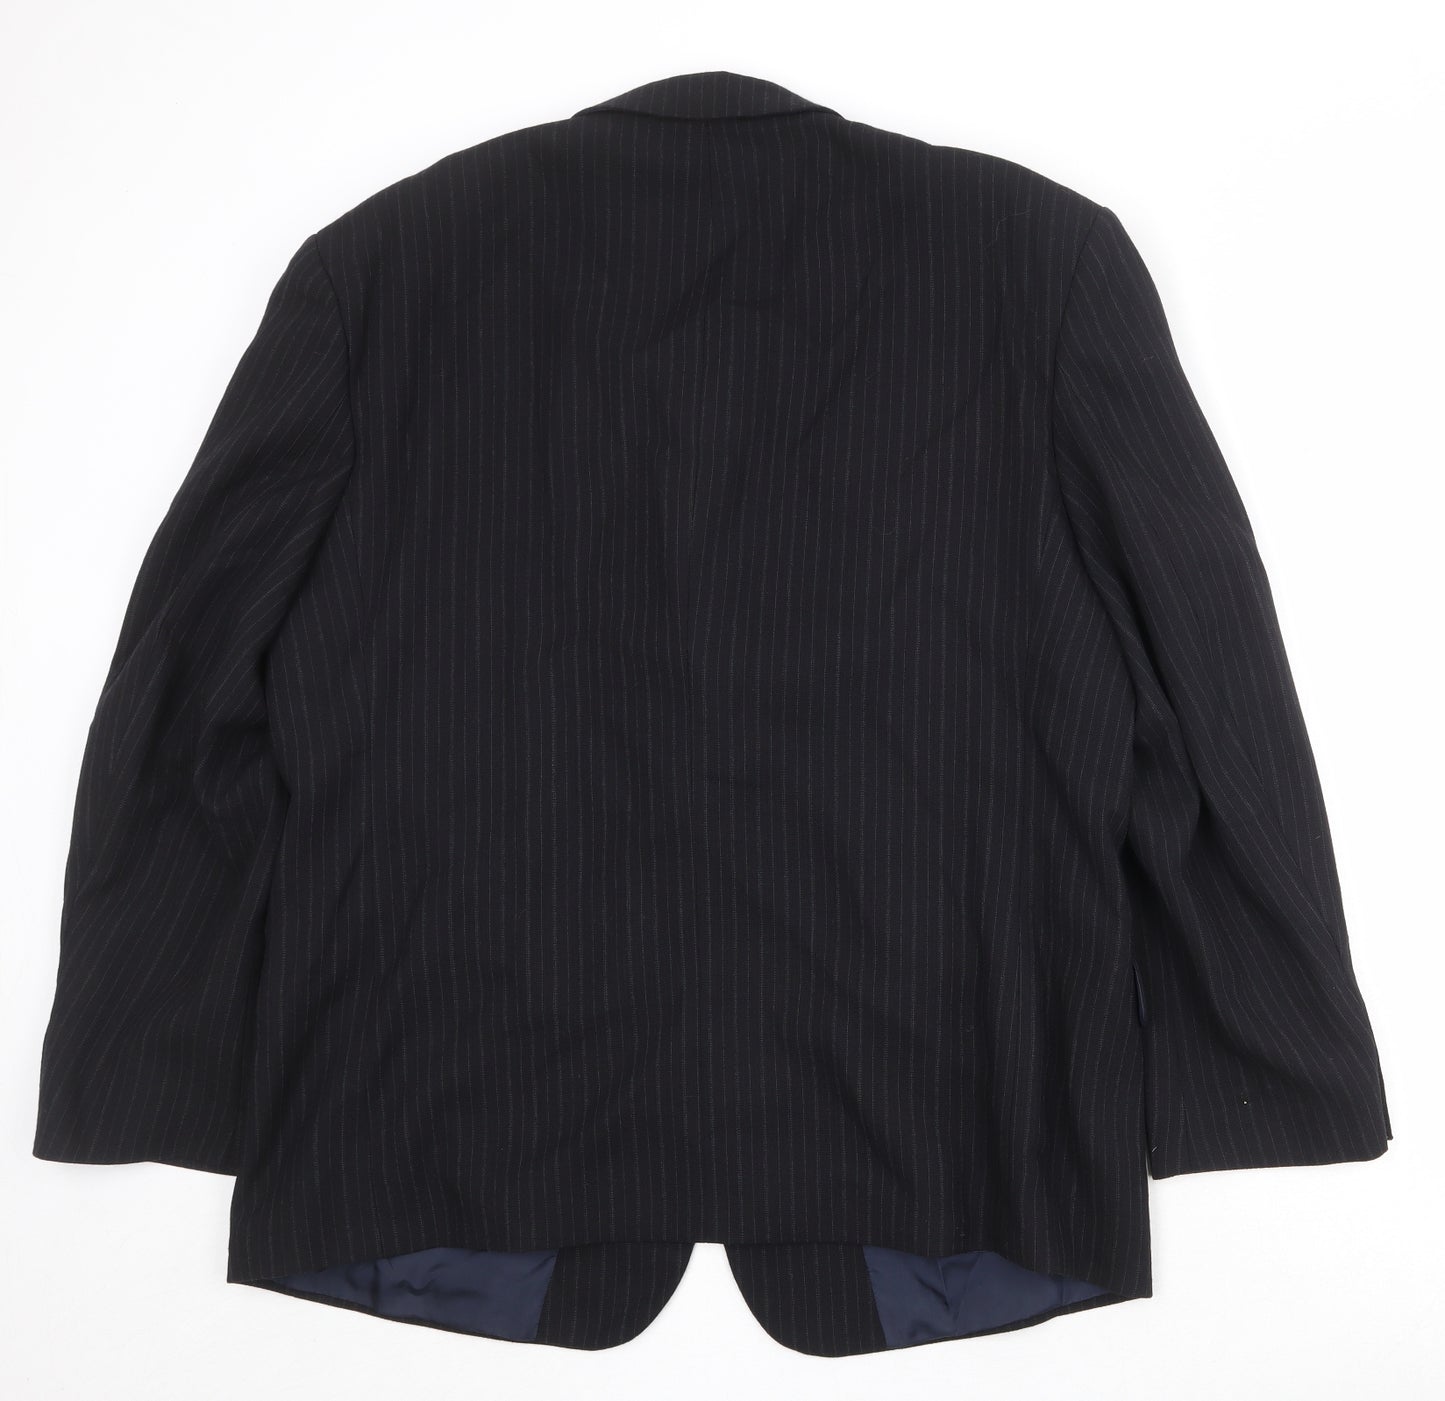 Moorcroft Mens Black Striped Wool Jacket Suit Jacket Size 46 Regular